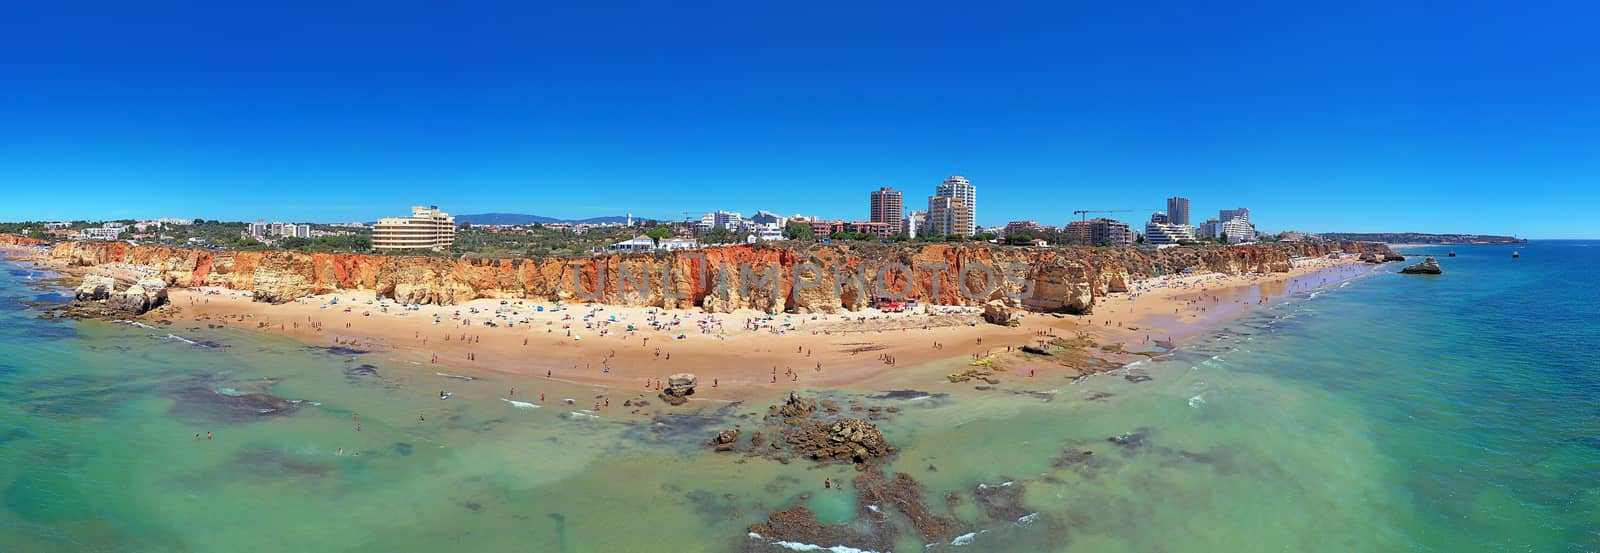 Aerial panorama from Praia da Rocha near Portimao in the Algarve by devy